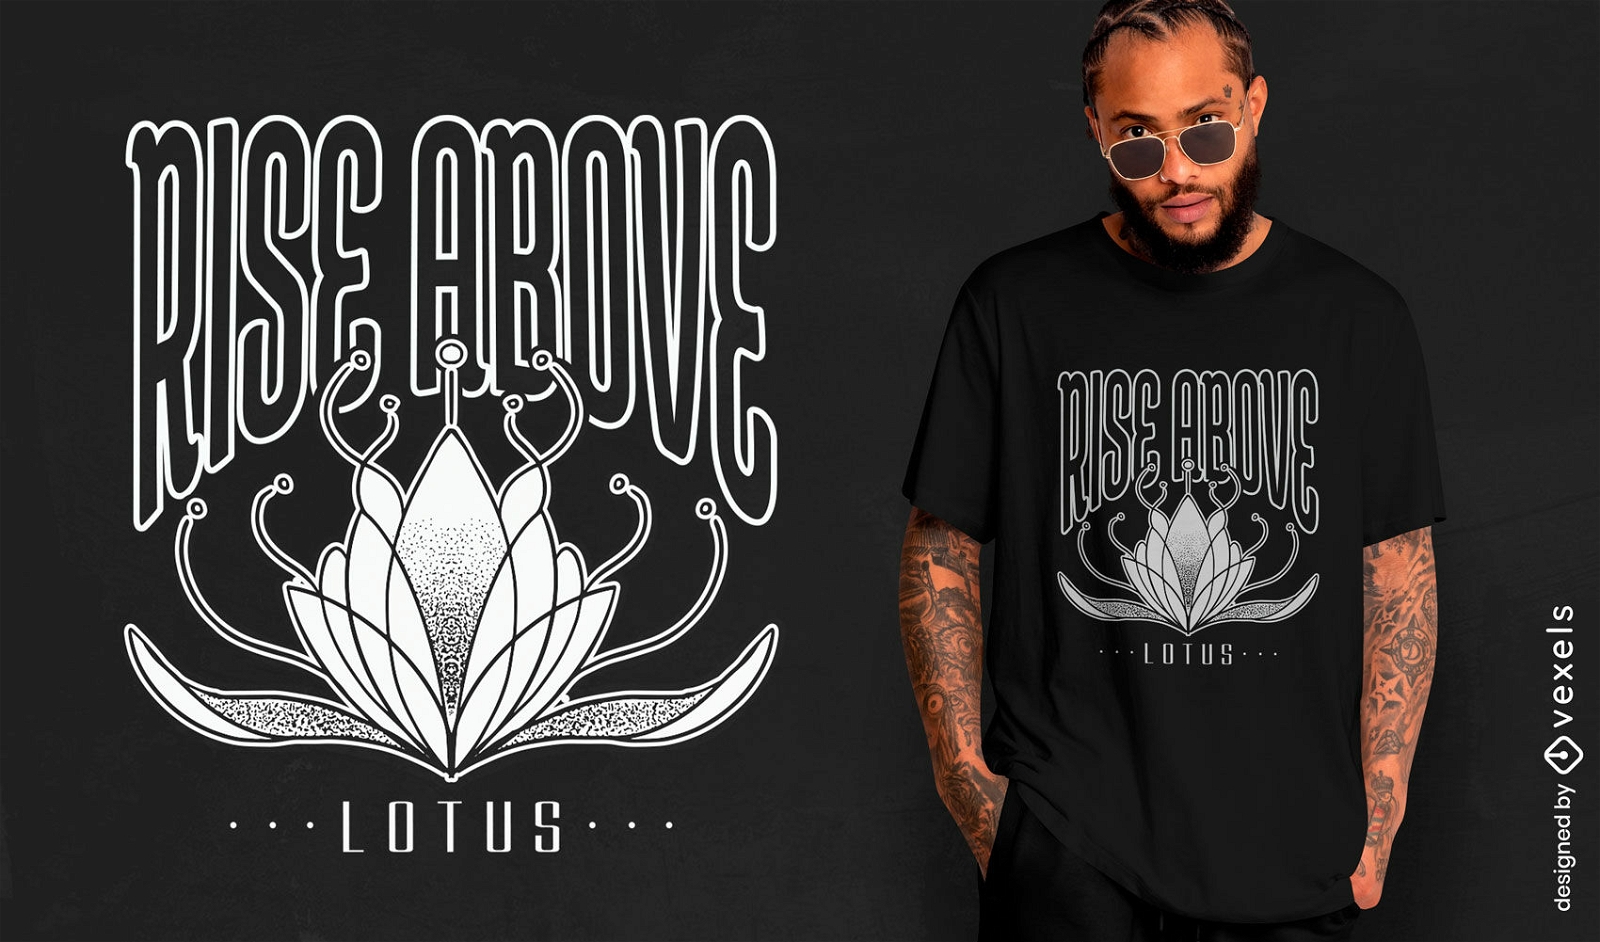 Rise above lotus t-shirt design